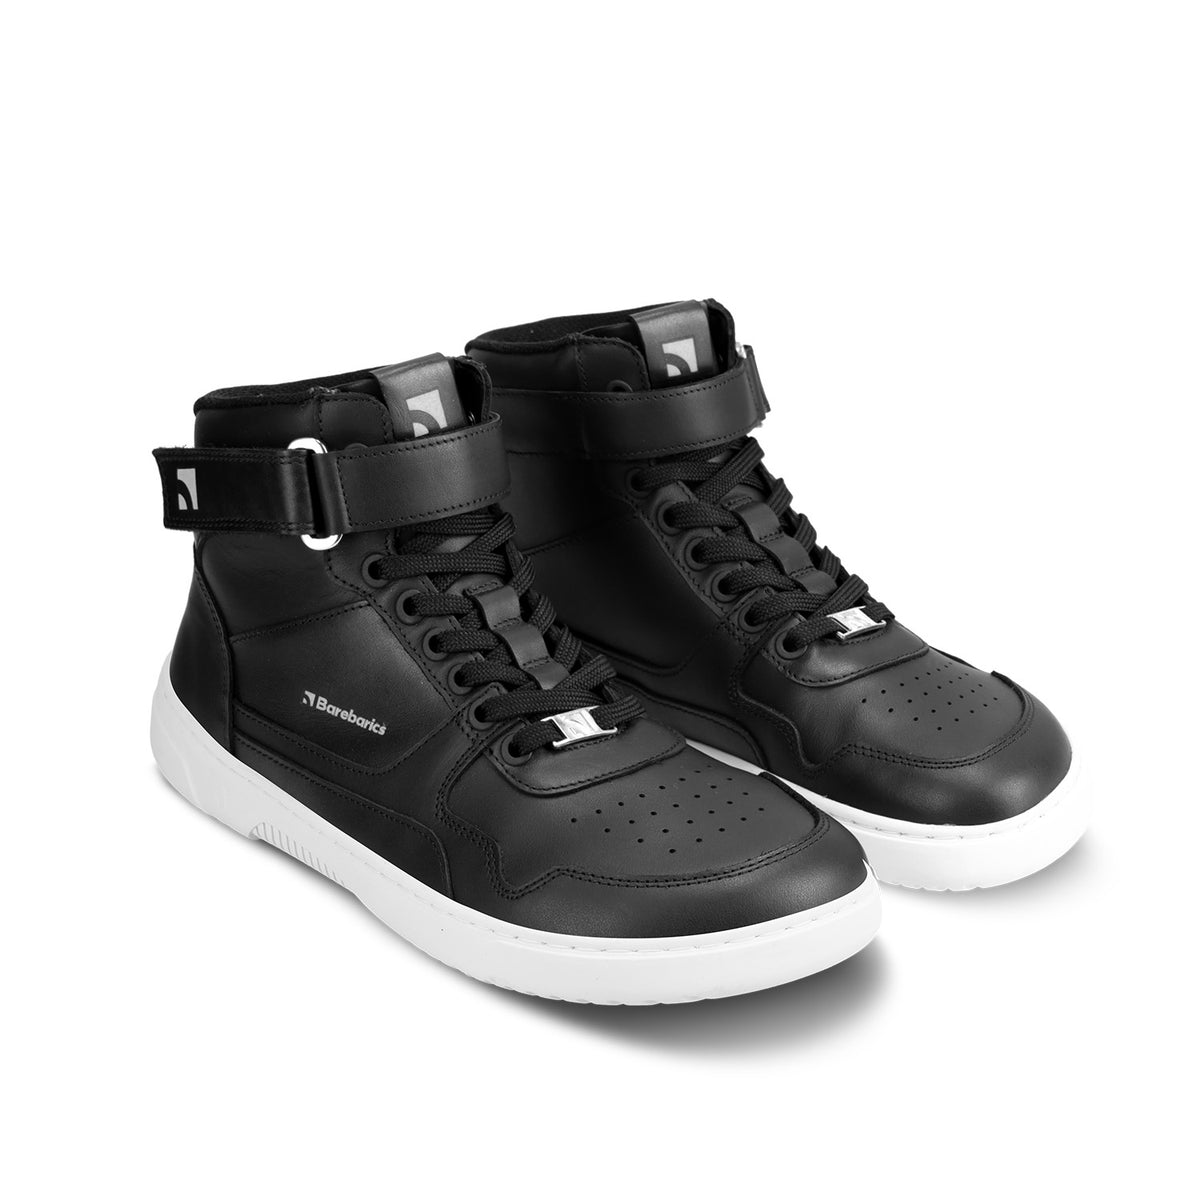 Barefoot Sneakers Barebarics Zing - High Top - Black & White - Leather 3  - OzBarefoot